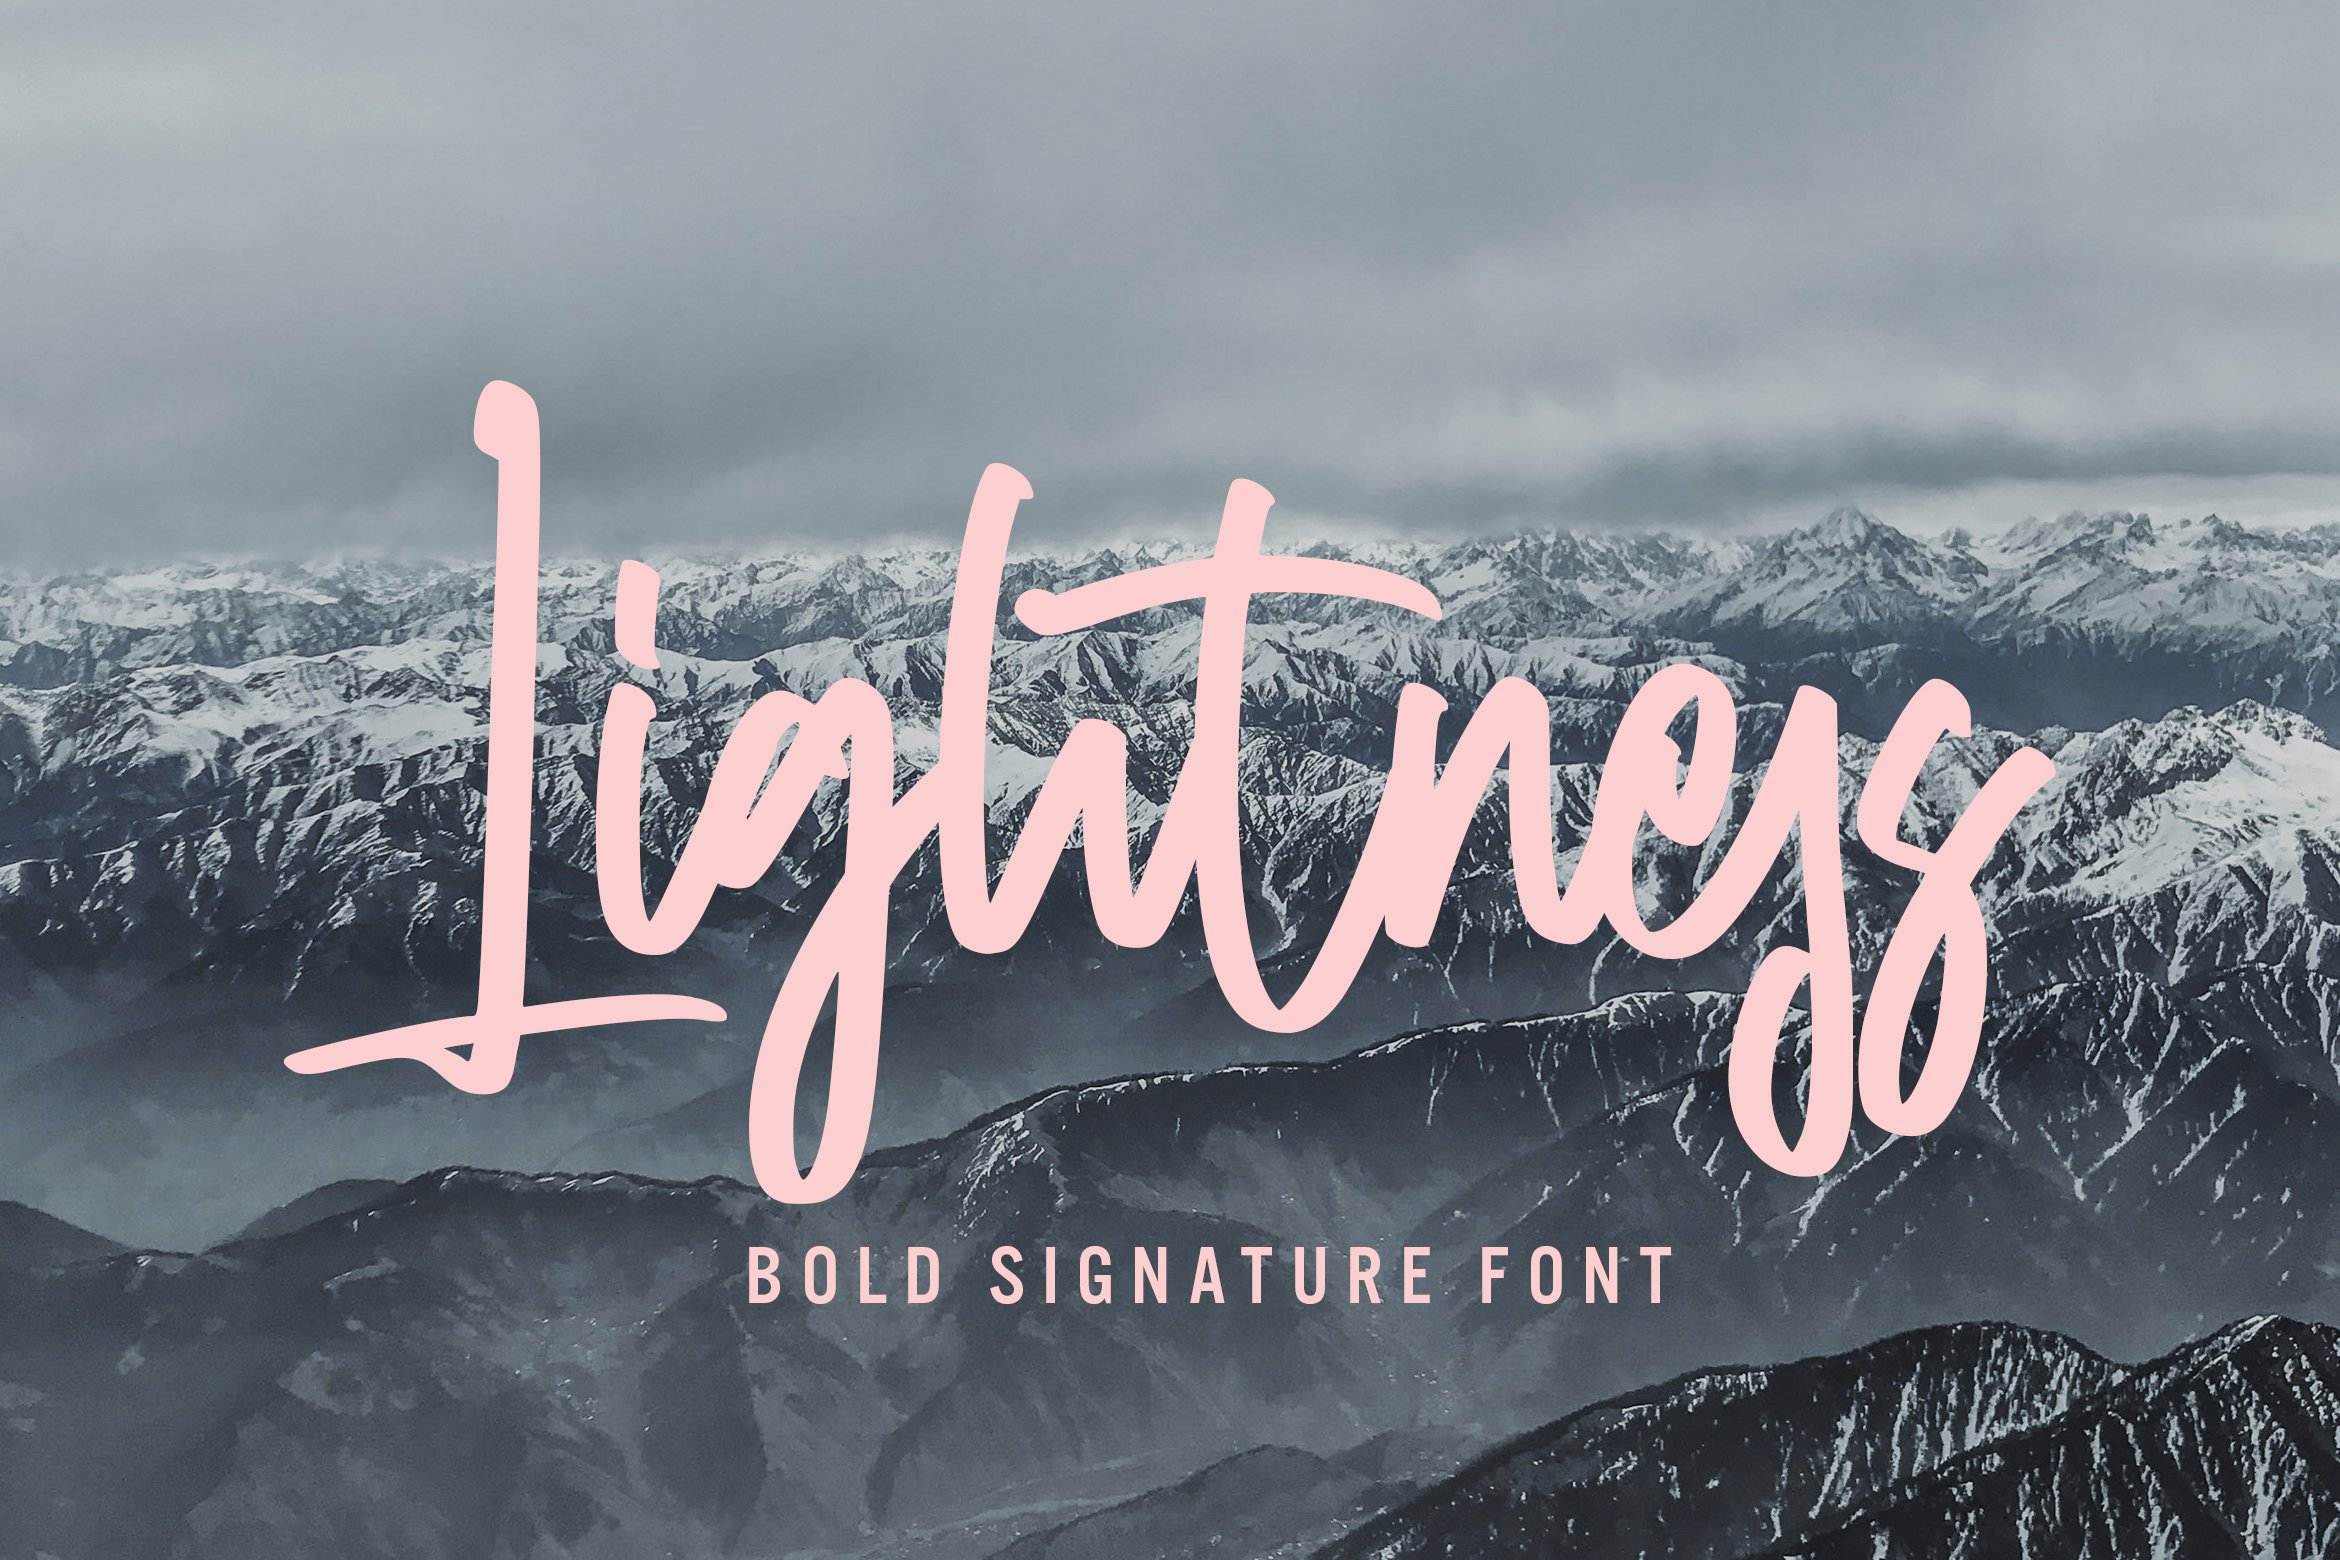 Lightness - Bold Signature Font cover image.